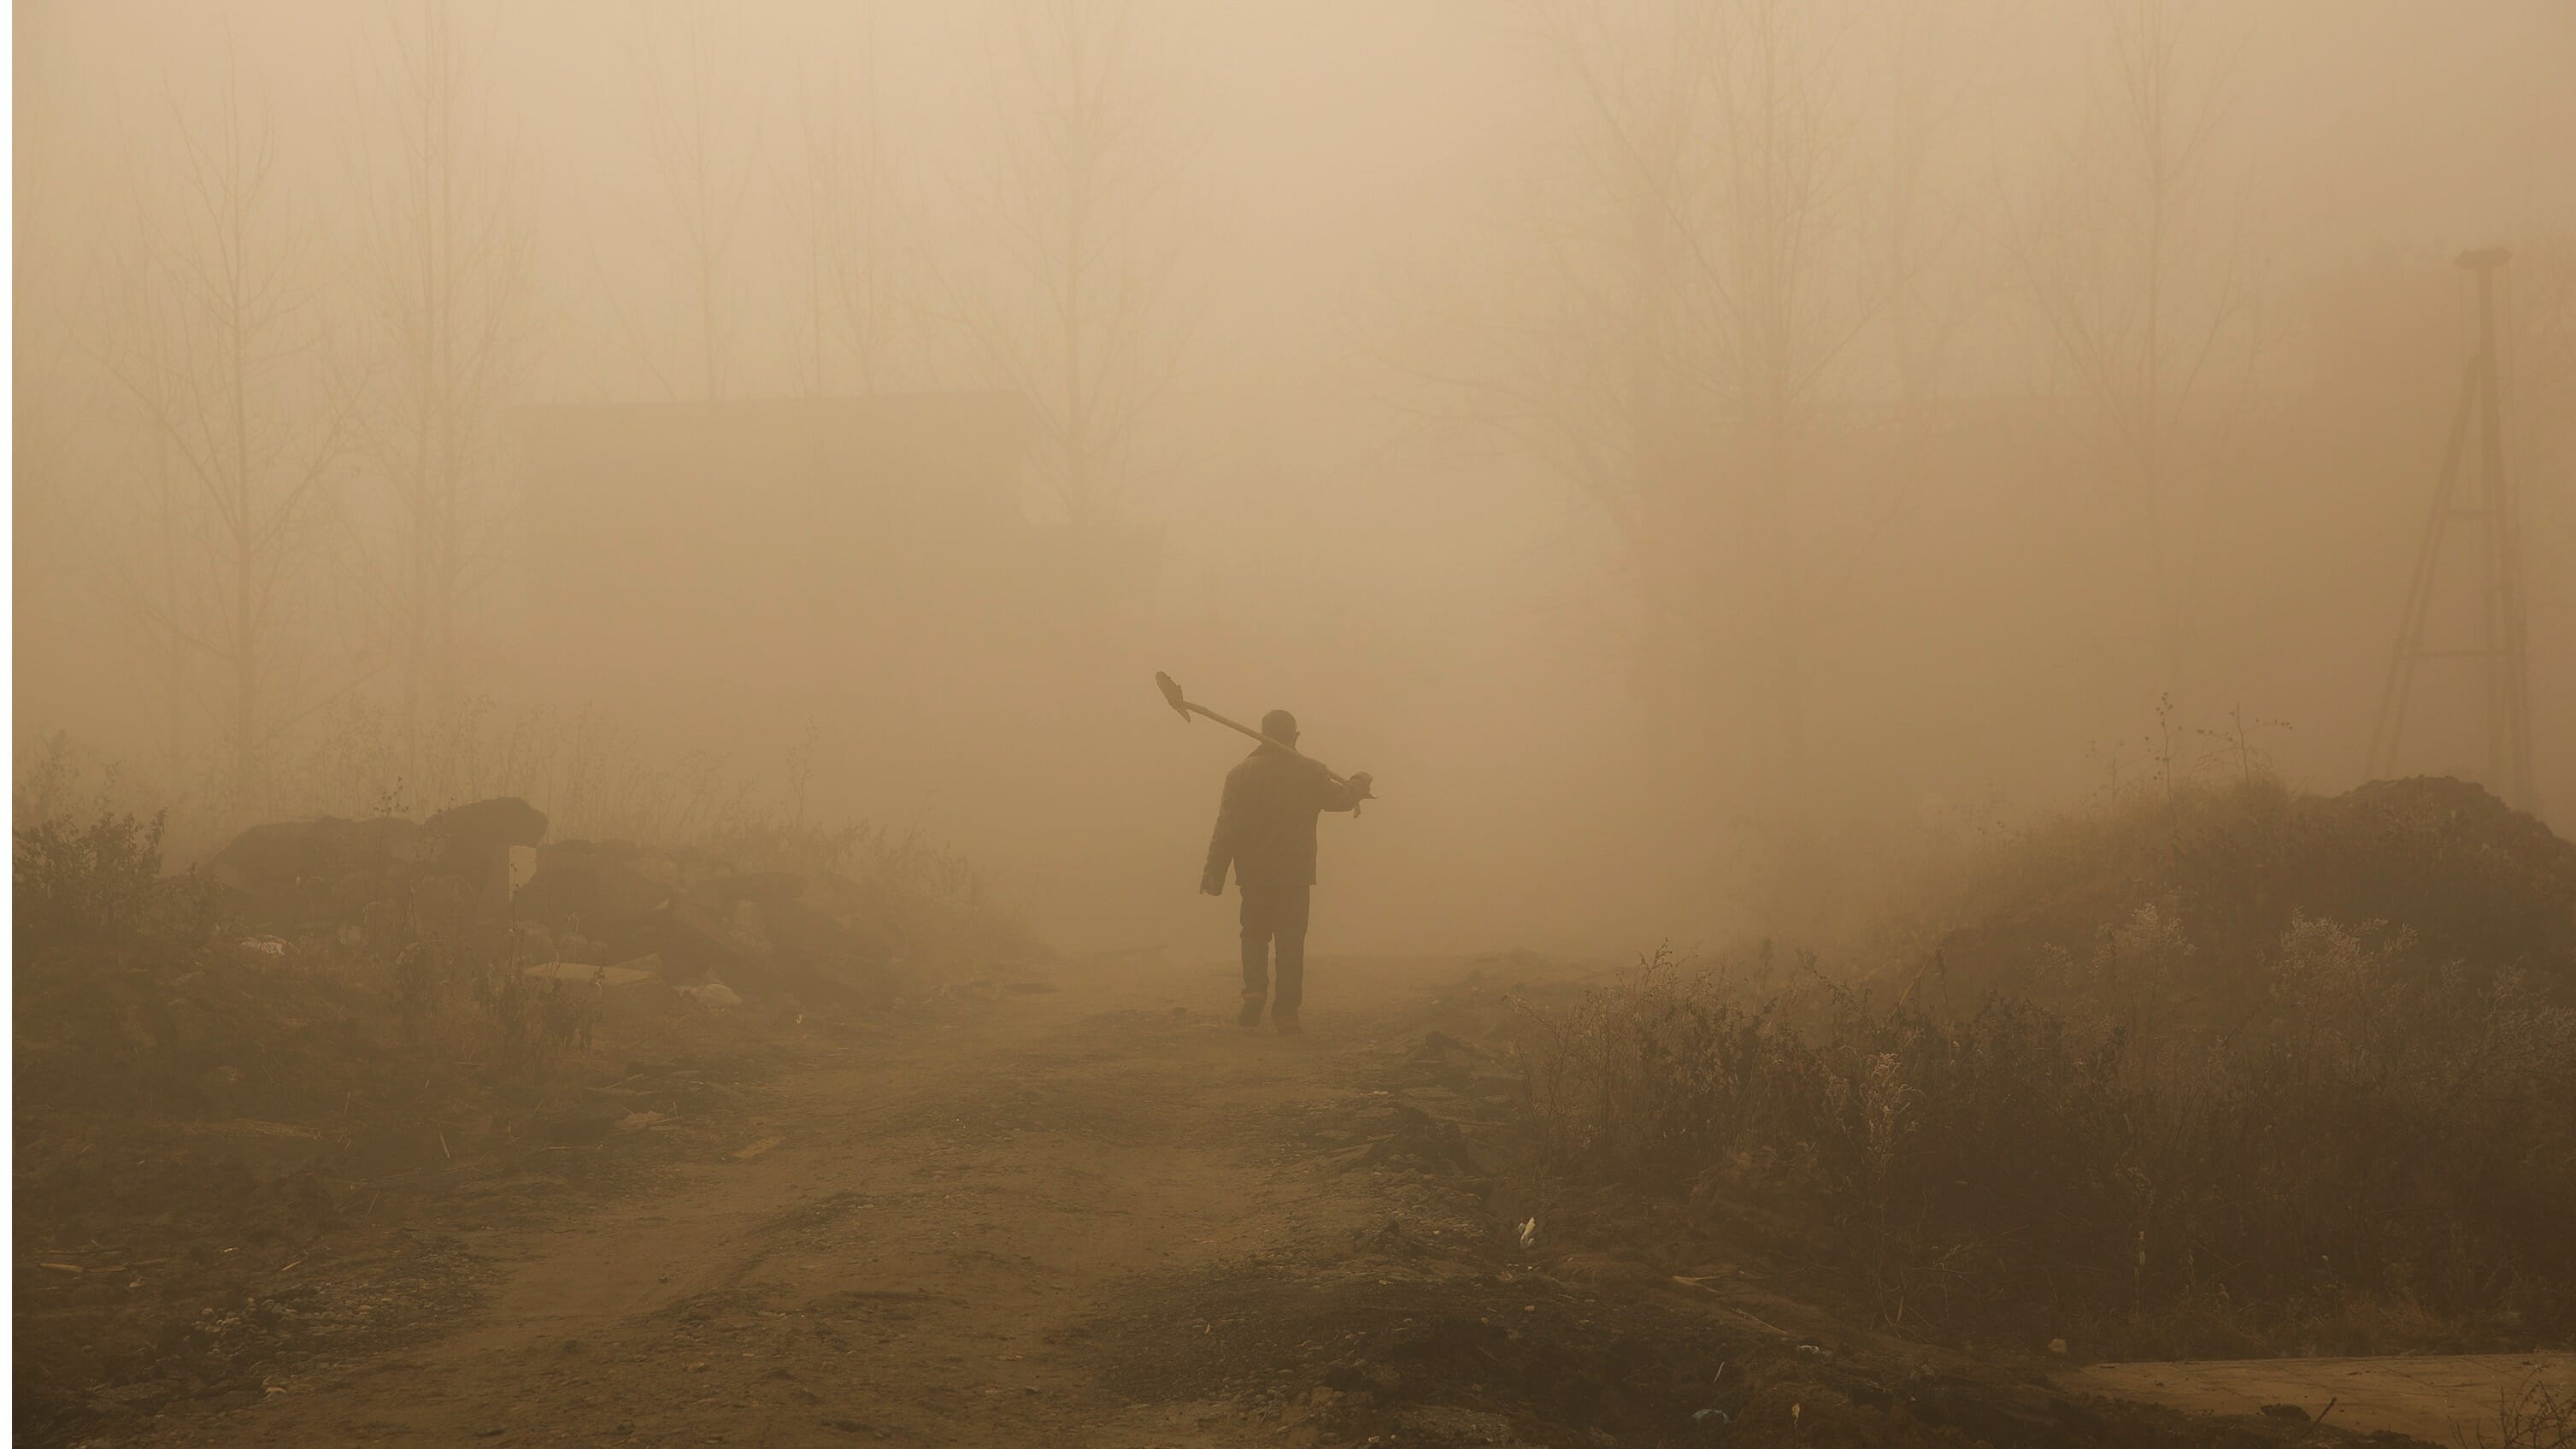 China’s Pollution-Based Economy Creates Dangerous Haze